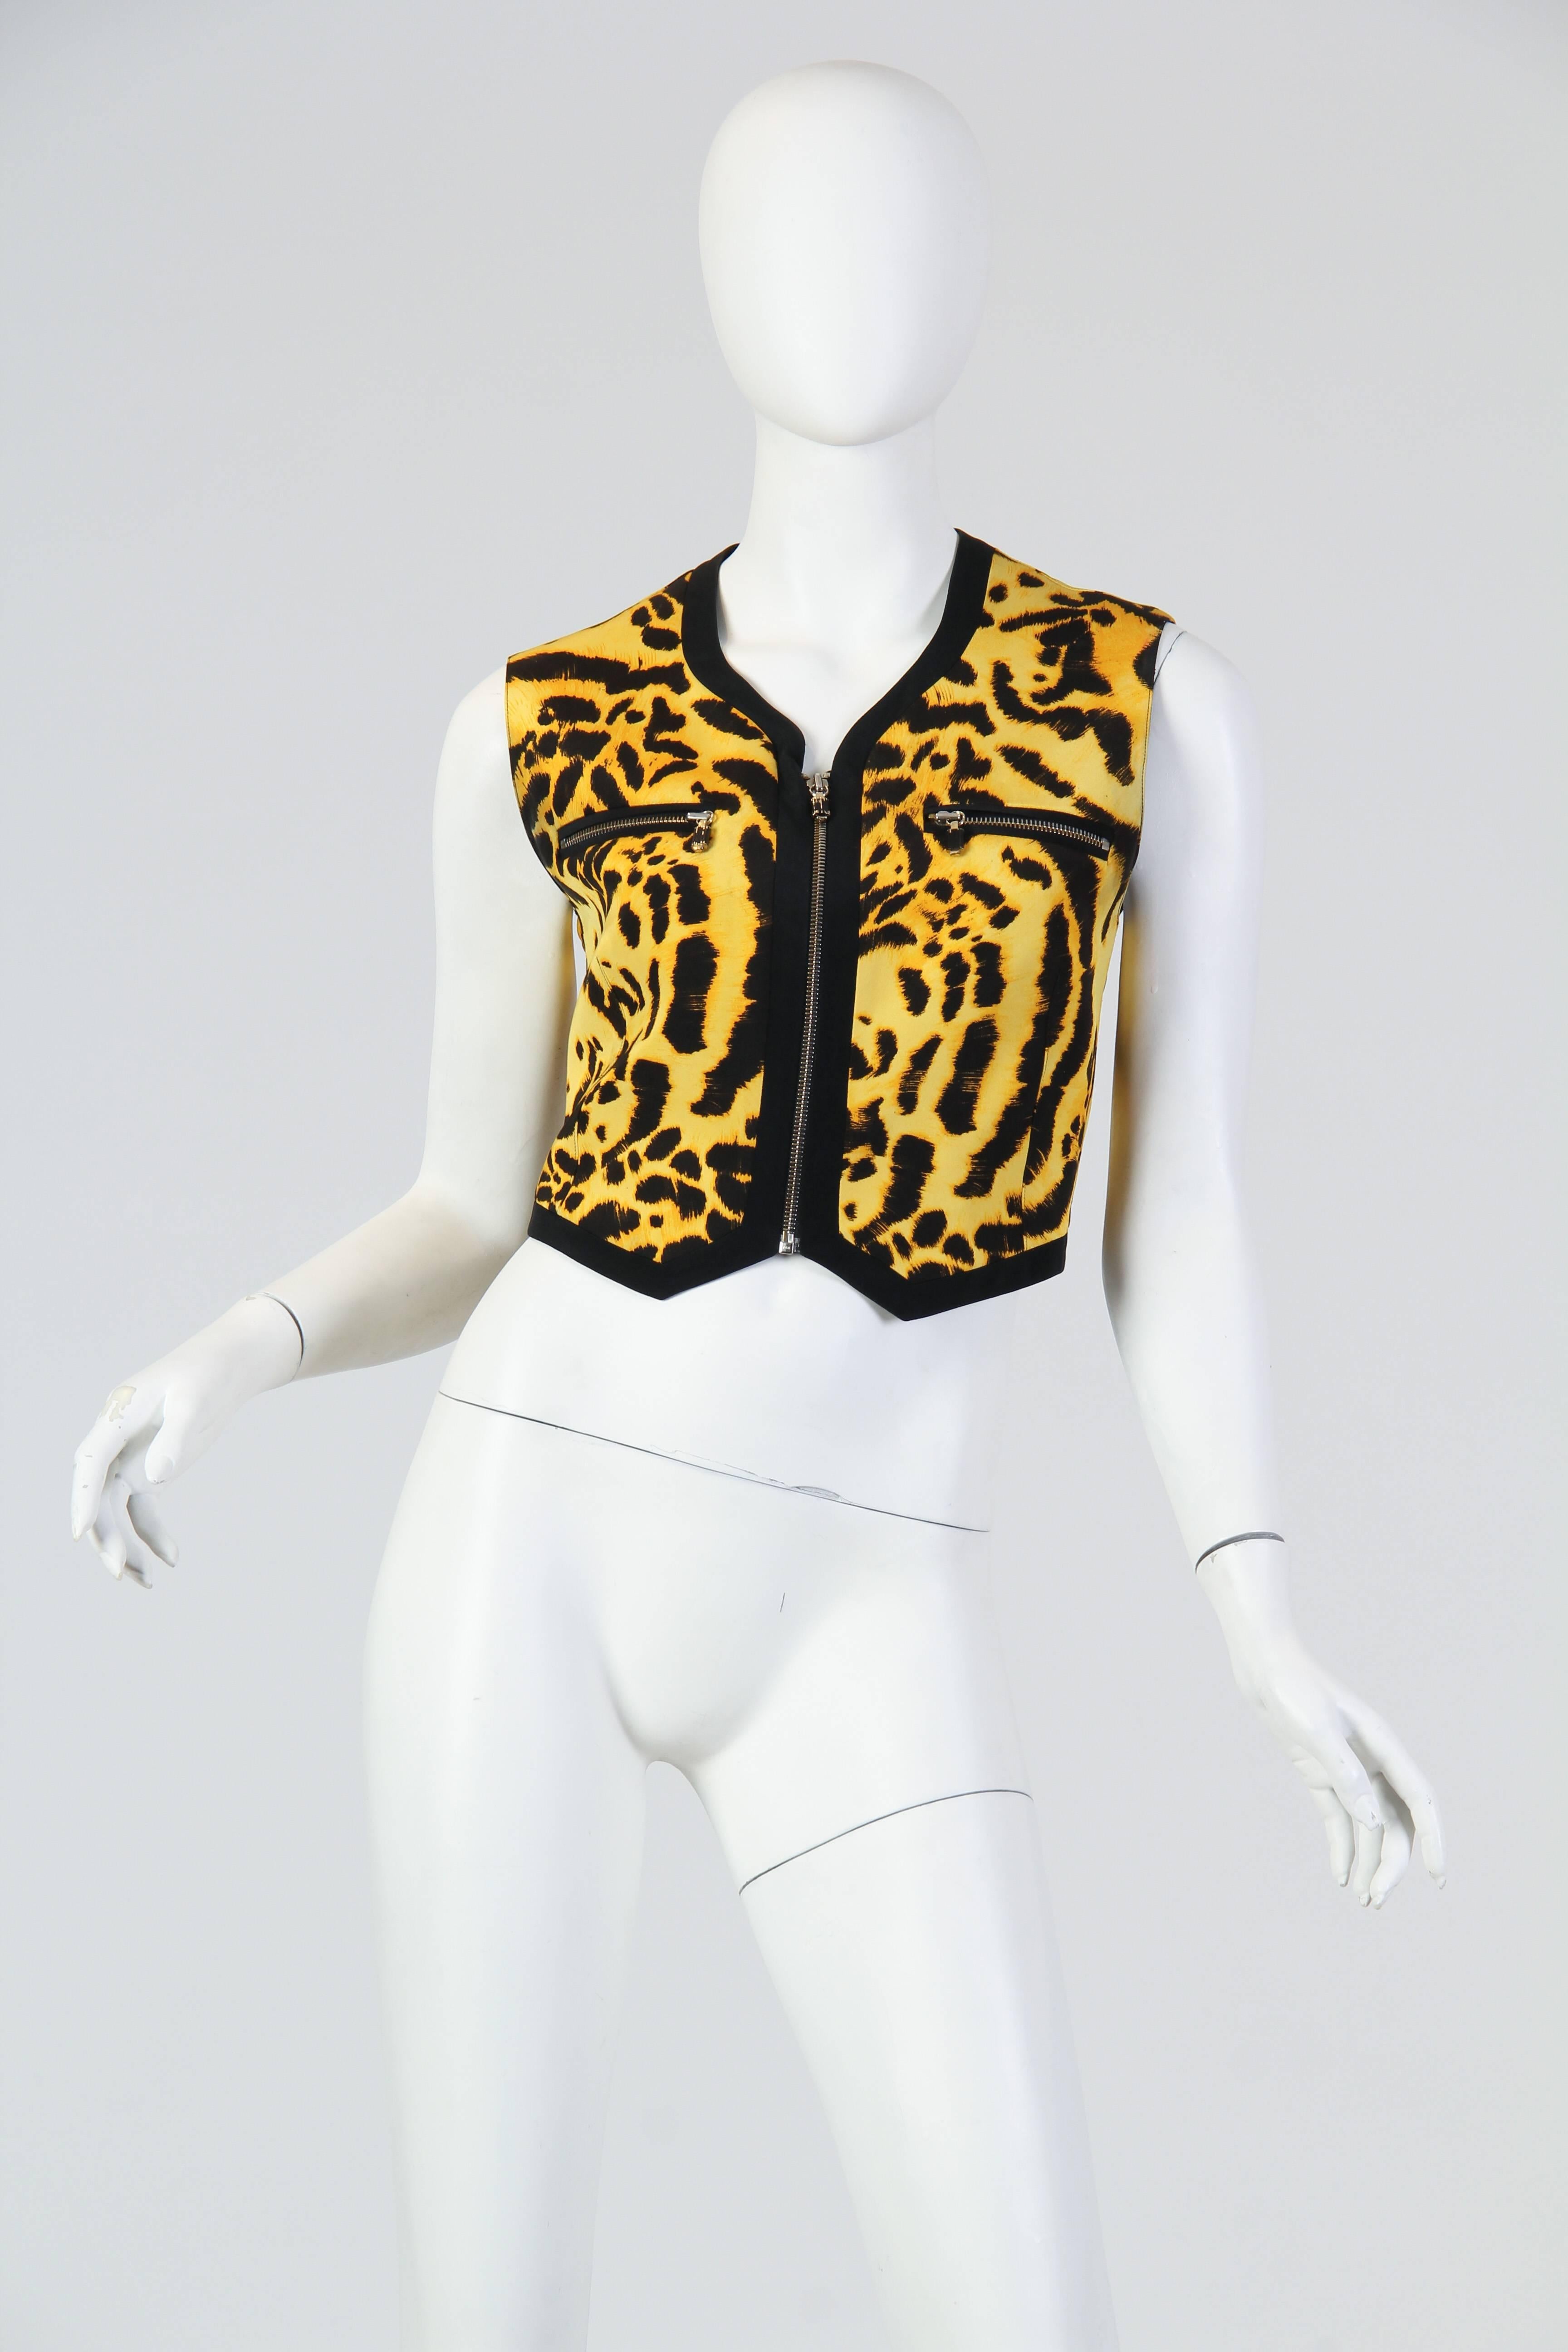 tyler the creator leopard vest